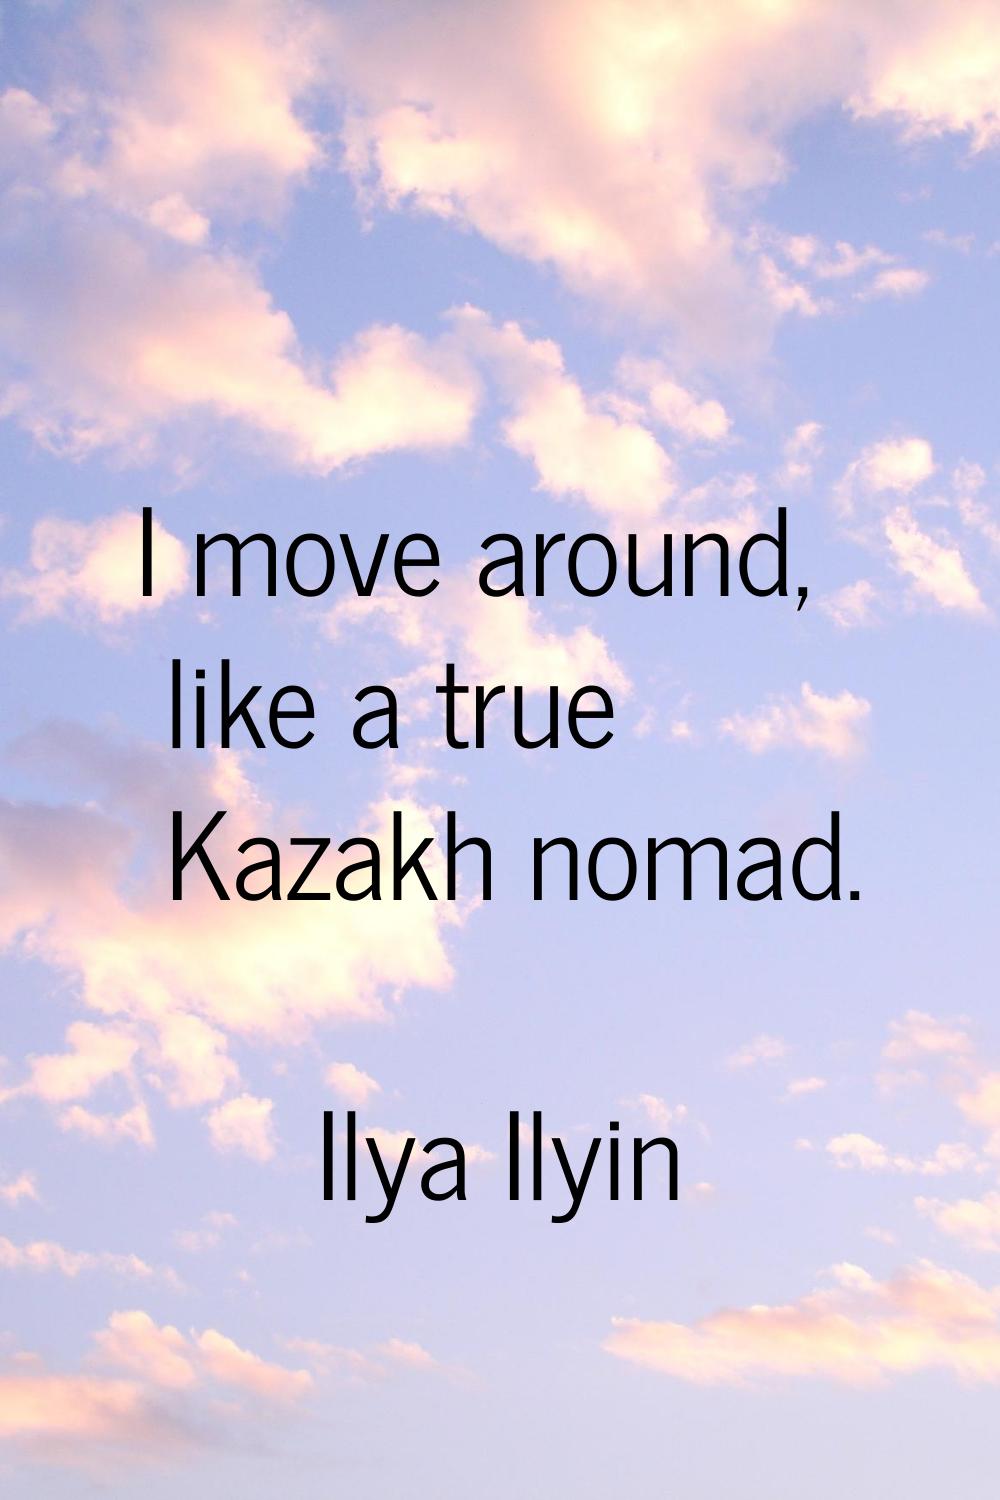 I move around, like a true Kazakh nomad.